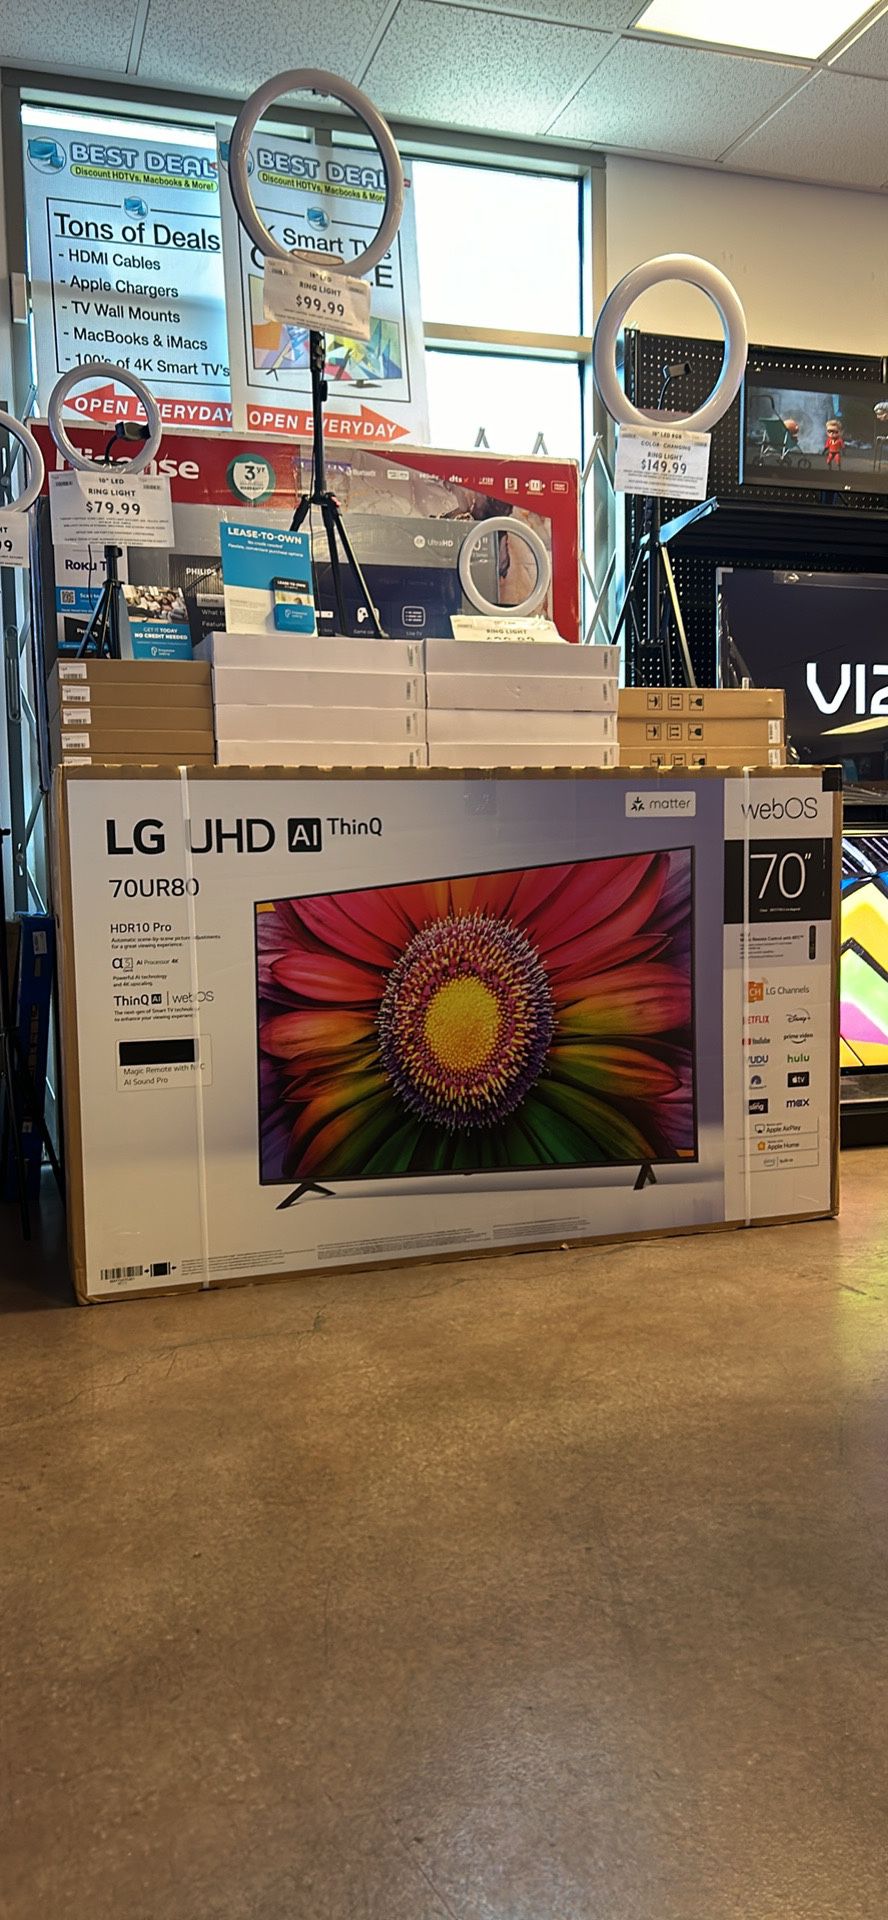 70” 4K UHD Smart TV